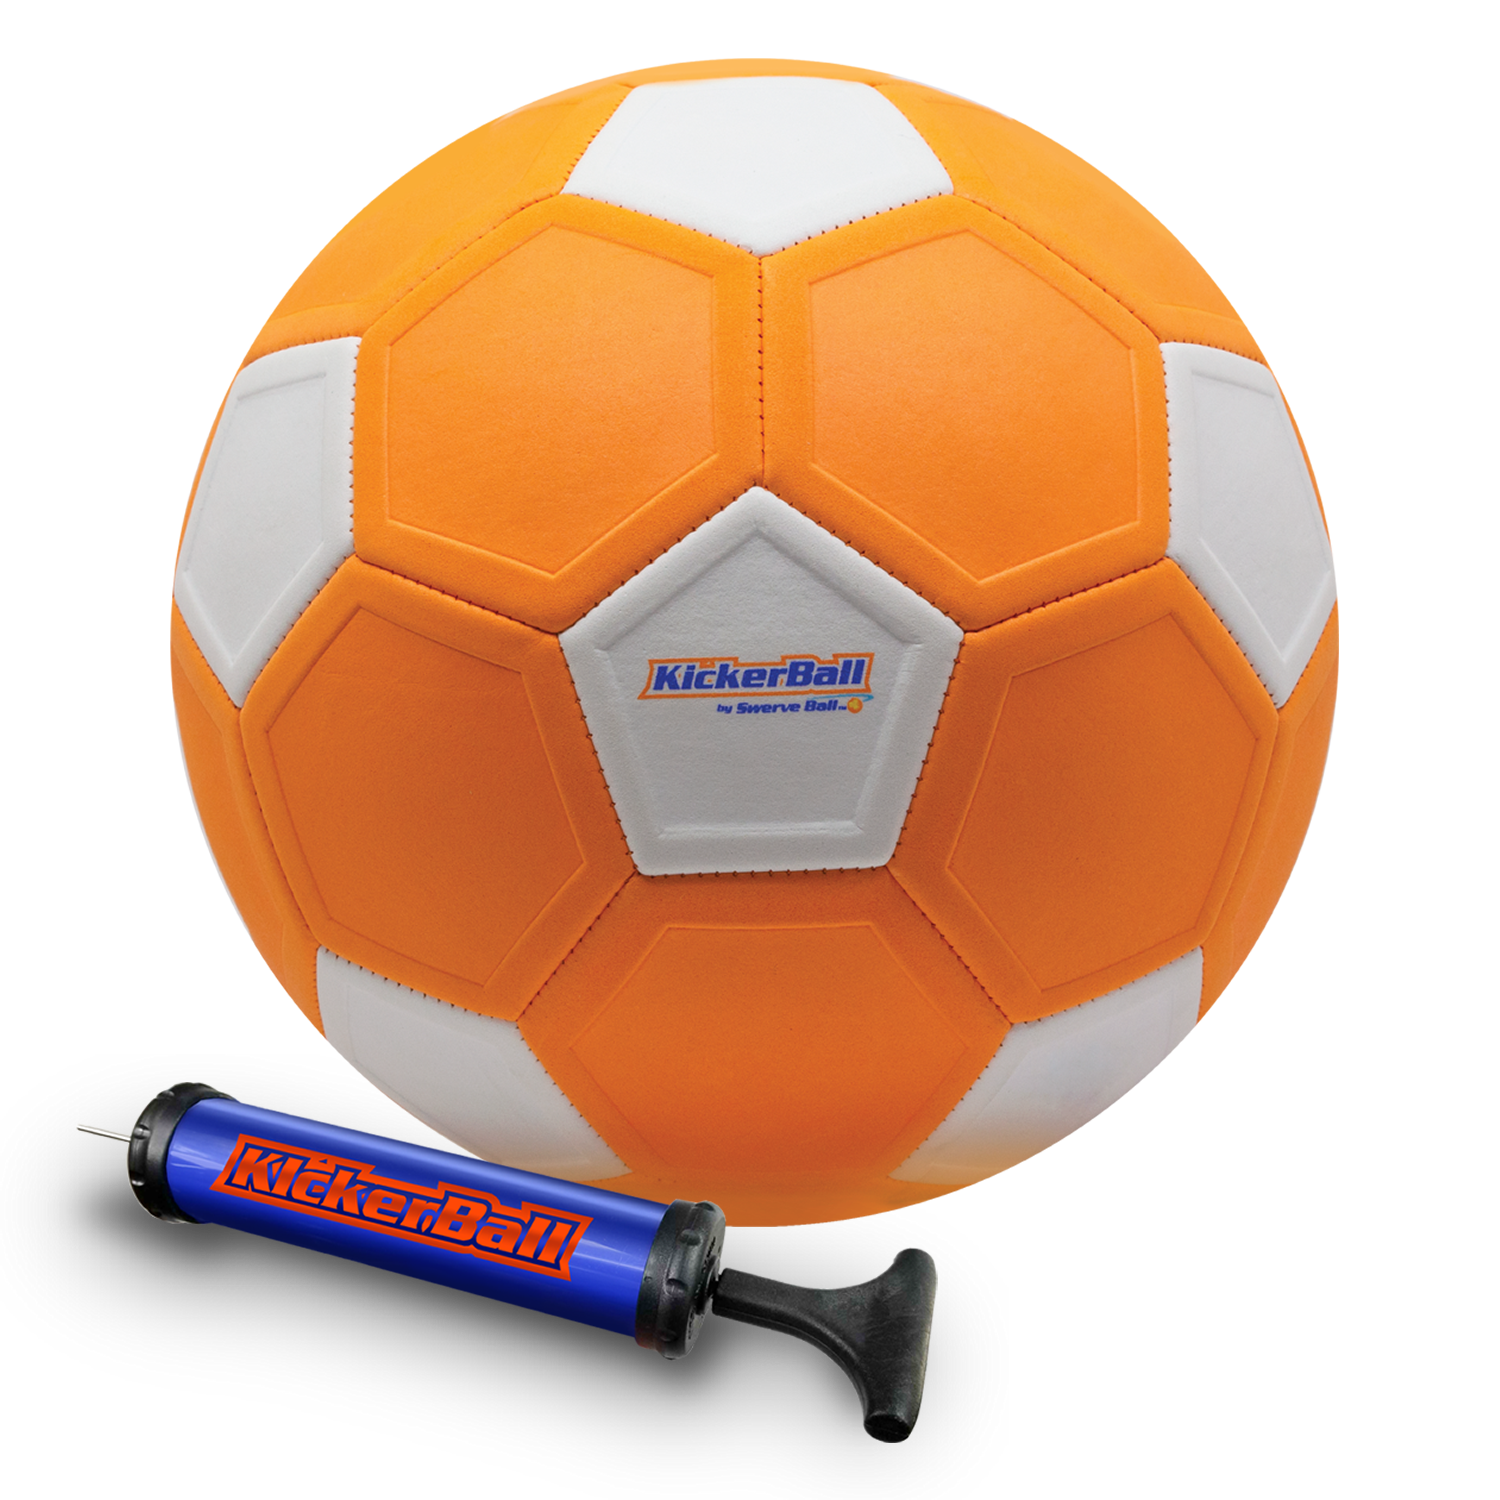 KickerBall 2.0 original de Swerve Ball, costuras reforzadas, balón de  fútbol especial para curvas extremas, ligero, aerodinámico, bola de truco  con giro, para niños y adultos, tamaño 4, color naranja : :  Electrónica